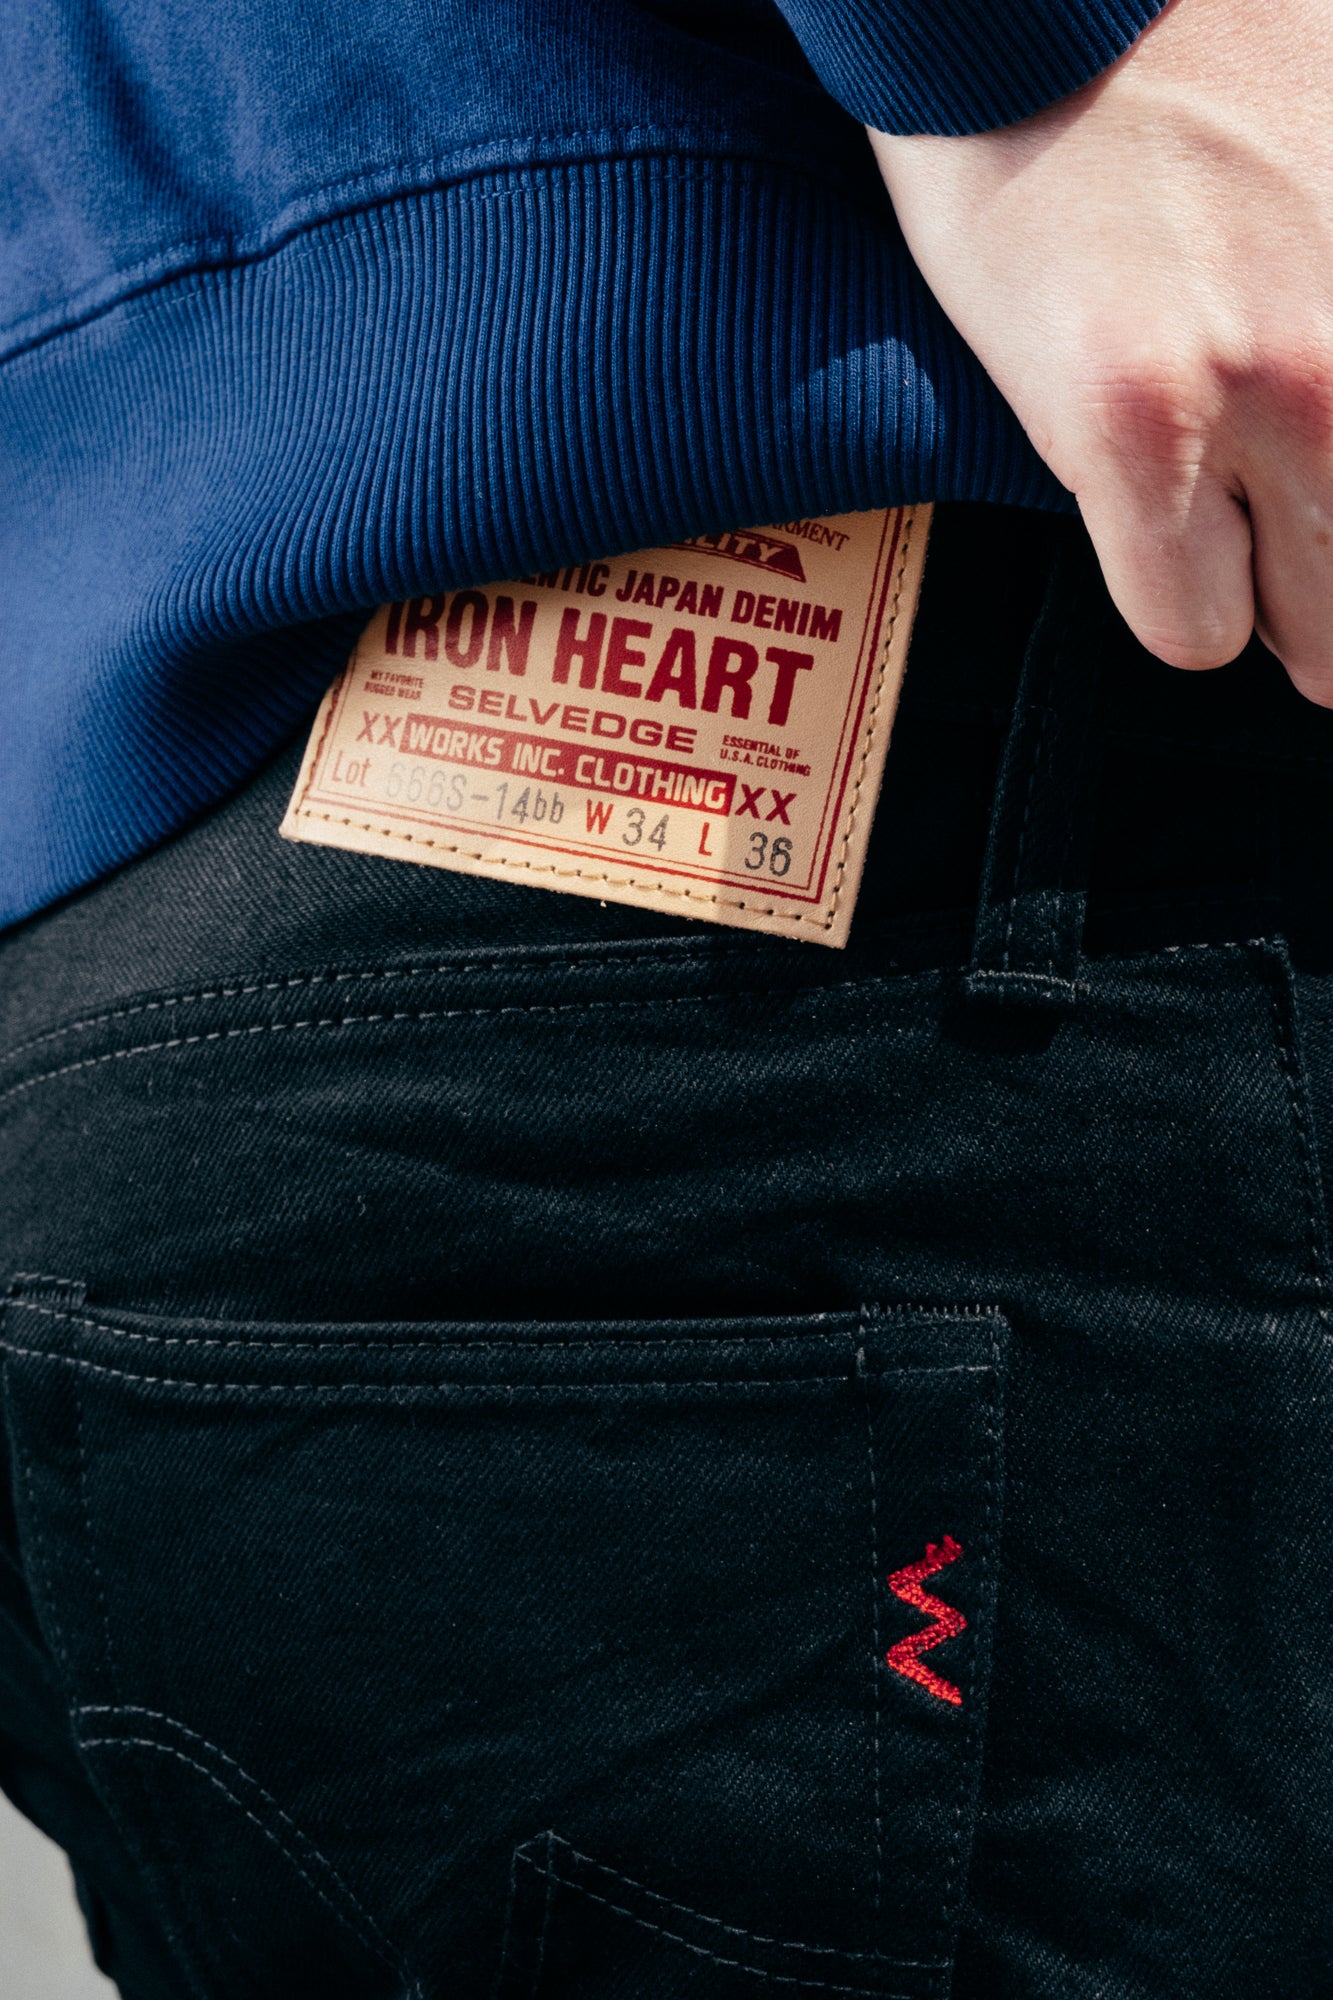 Iron Heart IH-666S-142bb 14oz Selvedge Denim Slim Straight Cut Jeans Black/ Black